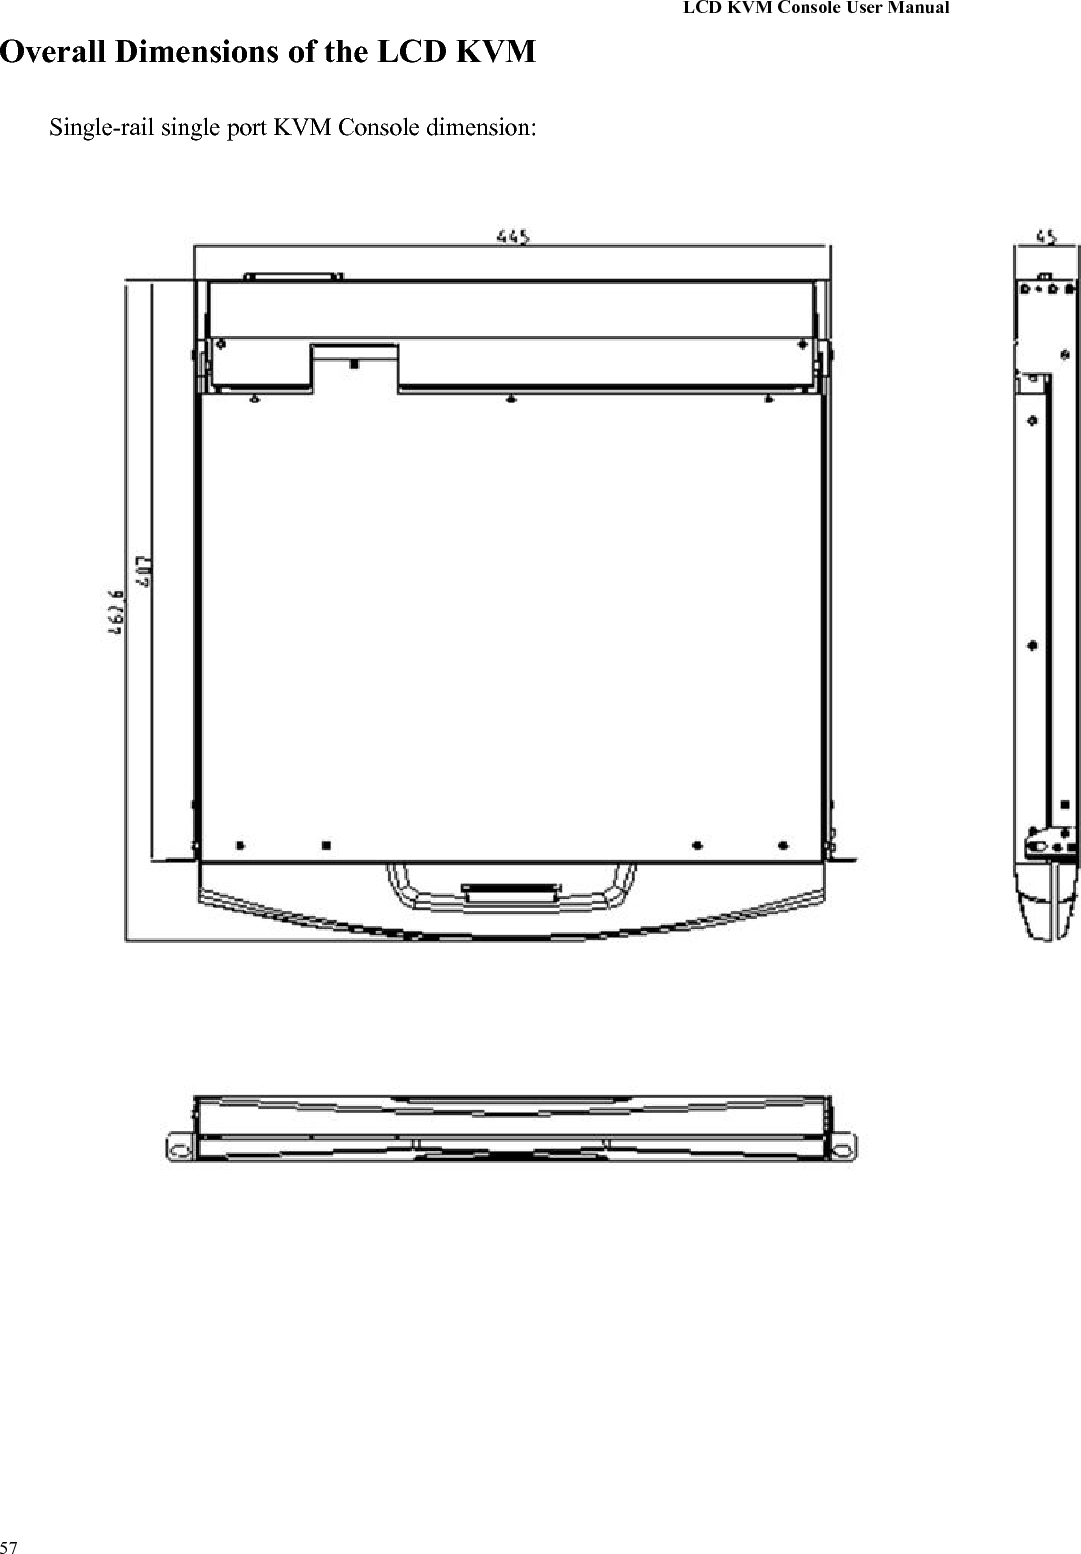 LCD KVM Console User Manual57Overall Dimensions of the LCD KVMSingle-rail single port KVM Console dimension: